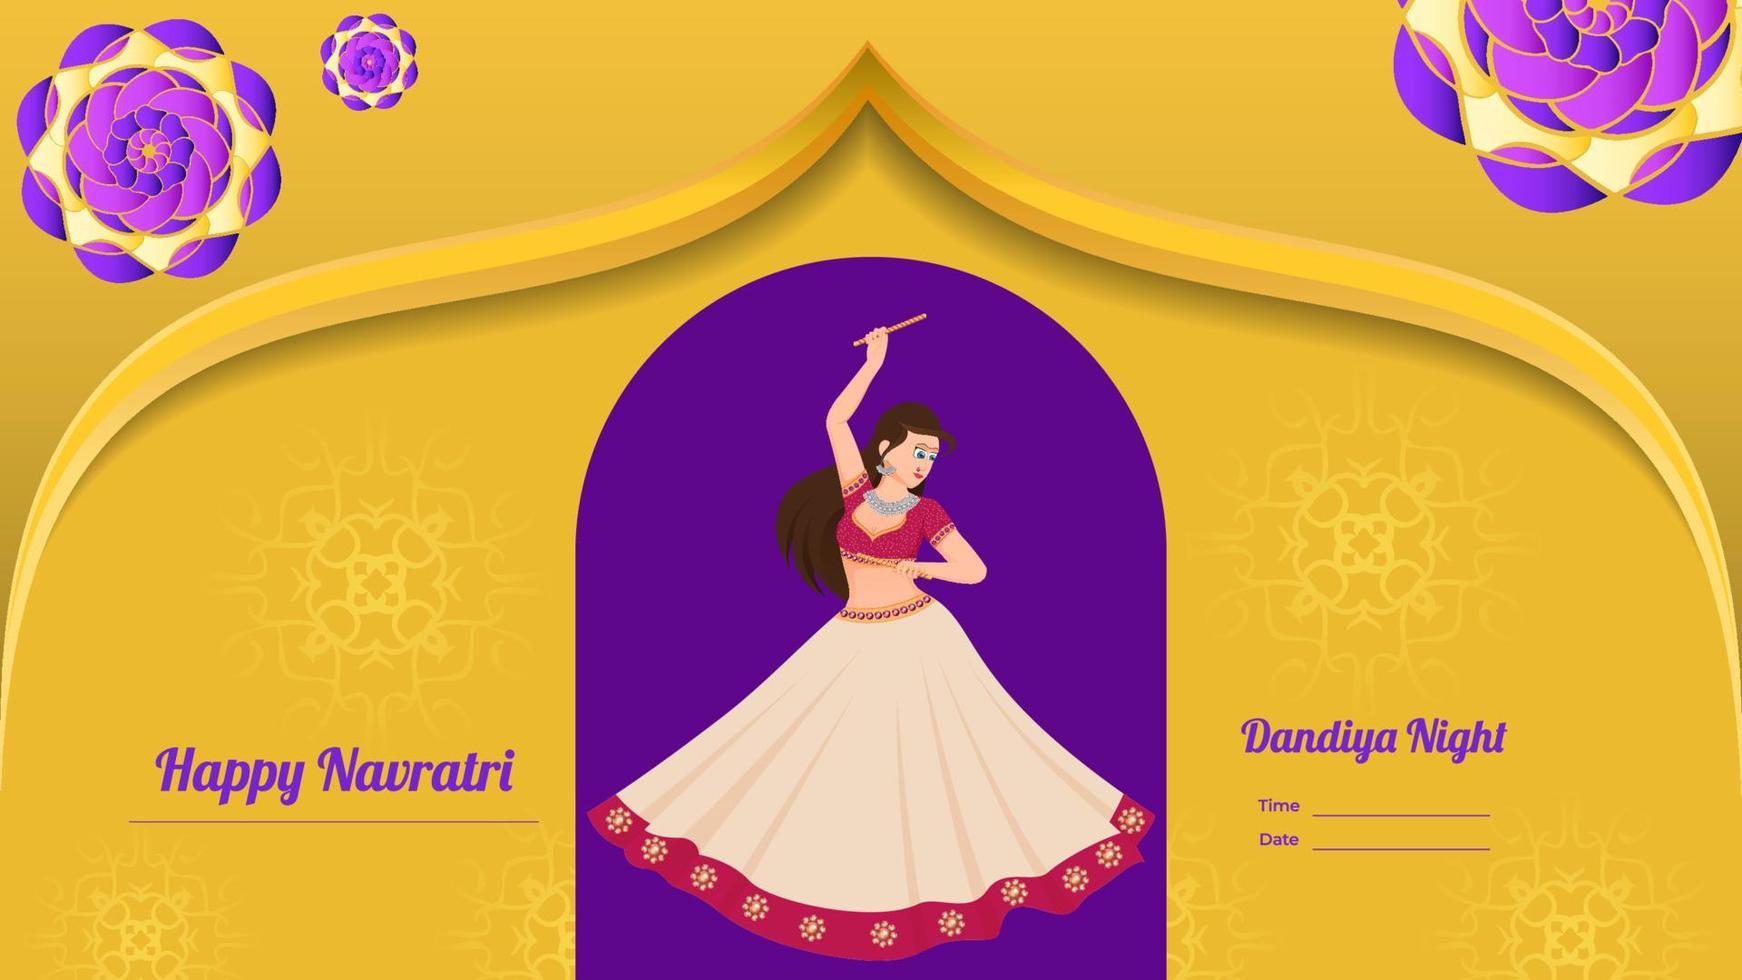 traditionell gekleideter Mädchenvektor, kreativer dandiya Fahnenvektor, glückliches navratri. vektor